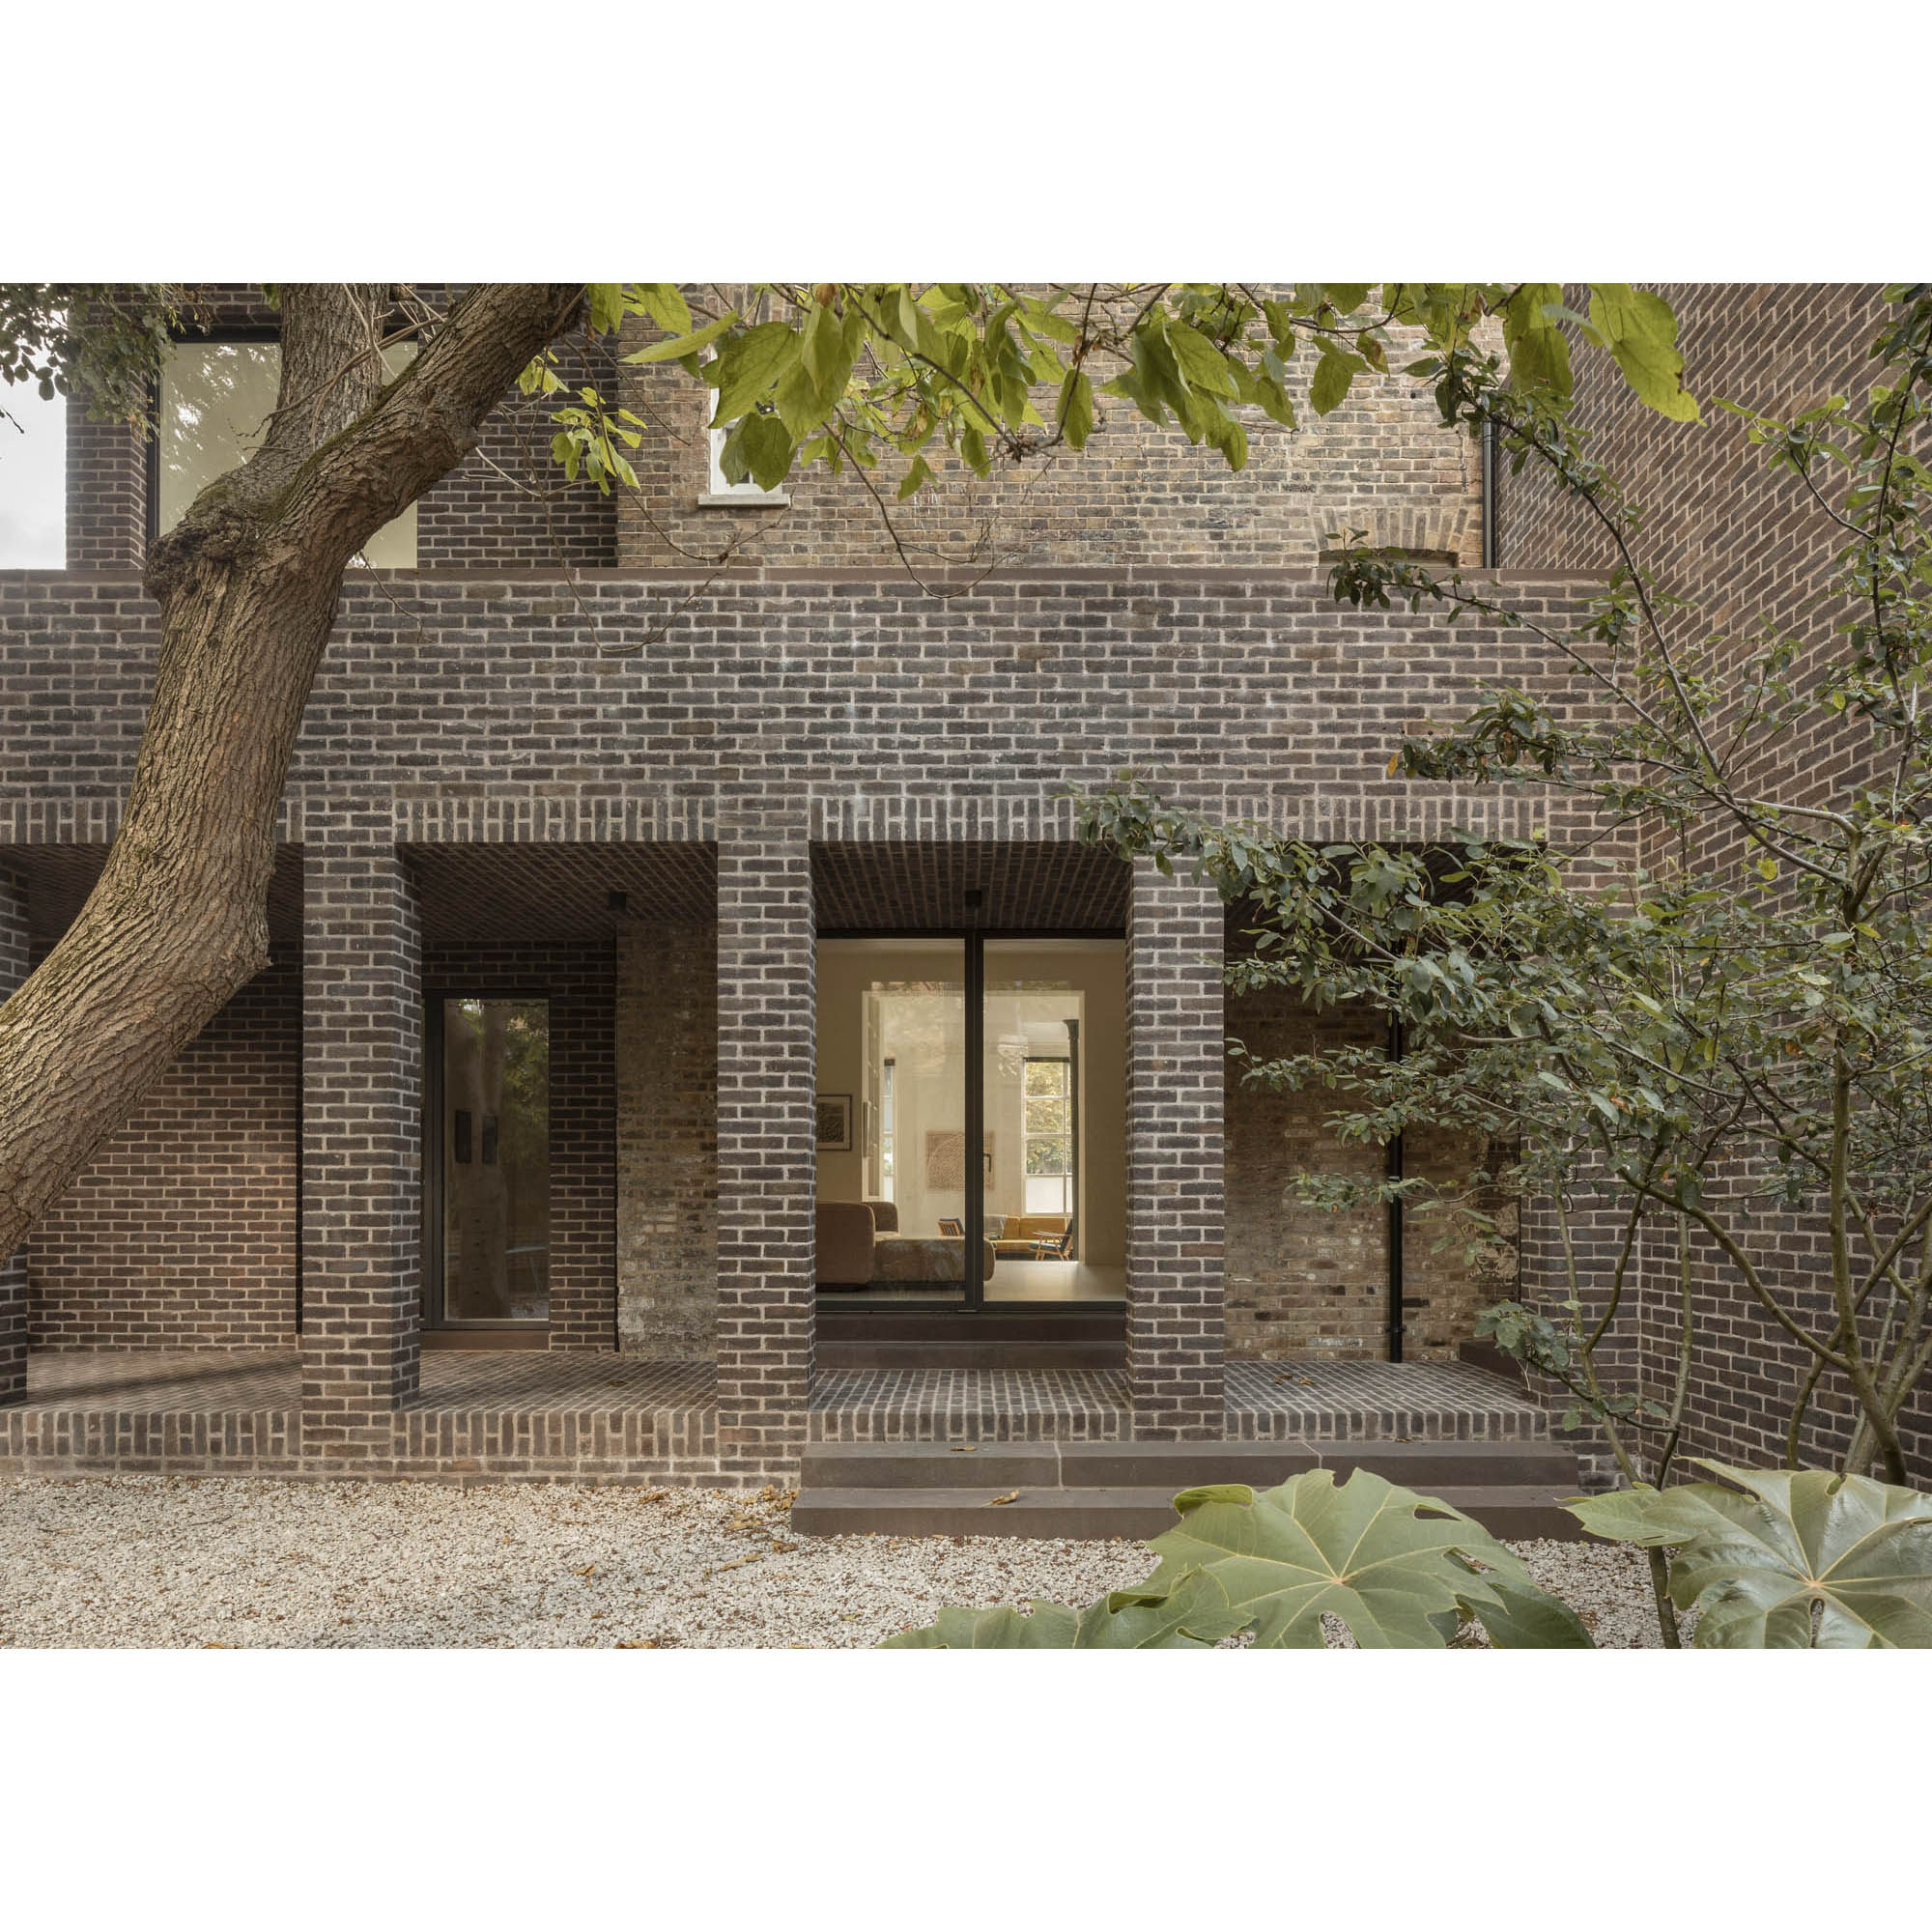 Erbar Mattes Architects Blockmakers Arms Hackney London pub conversion RIBA awards 2023 garden view